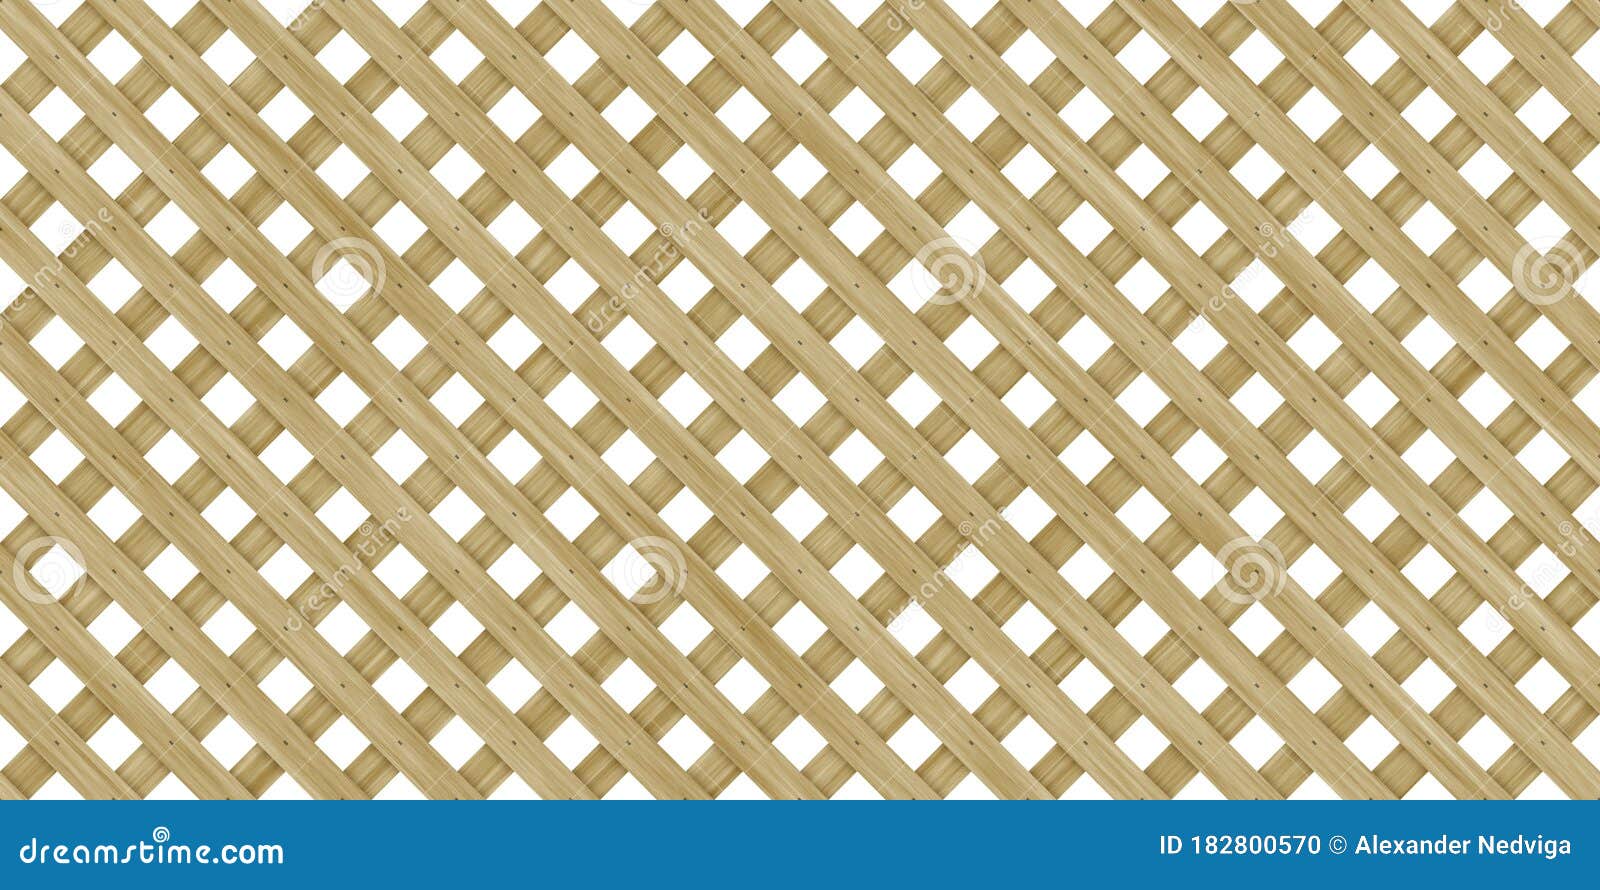 seamless wood lattice background